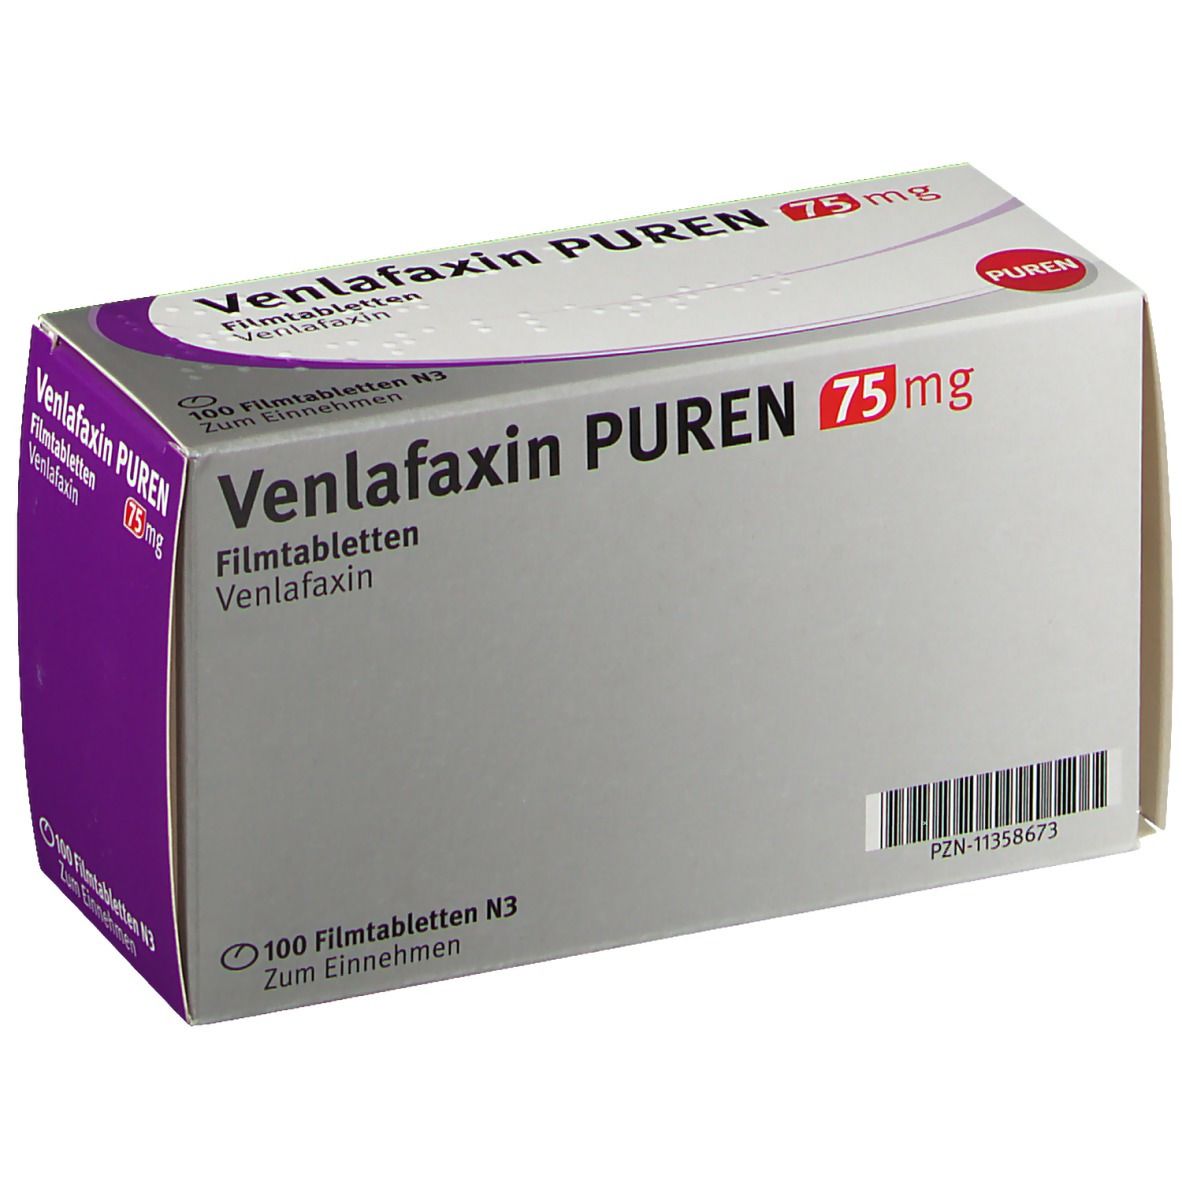 Купить венлафаксин 75. Венлафаксин 75. Венлафаксин 75 мг. Venlafaxine 0.075. Венлаксор 75 мг.